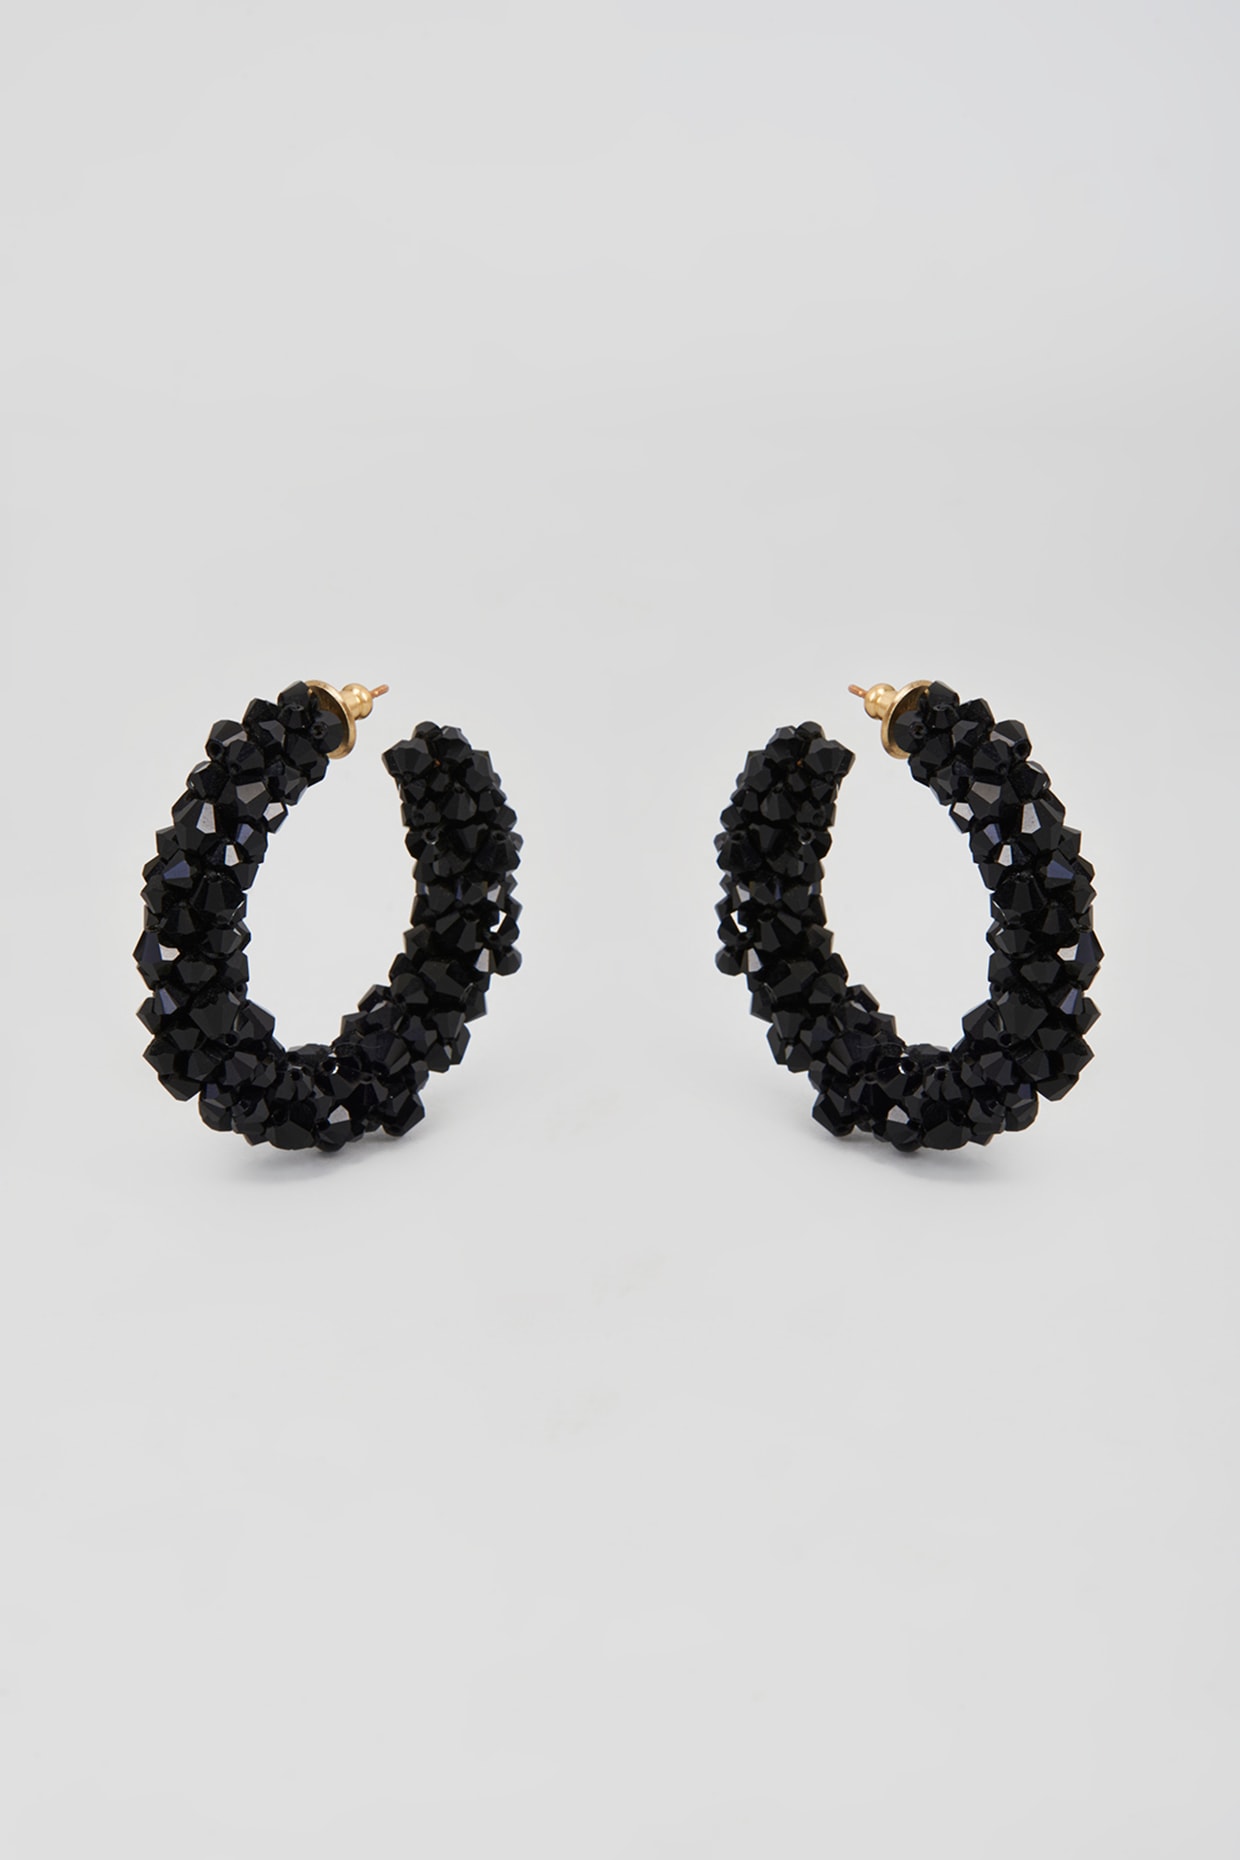 14k White Gold Black and White Pave Diamond Hoop Earrings